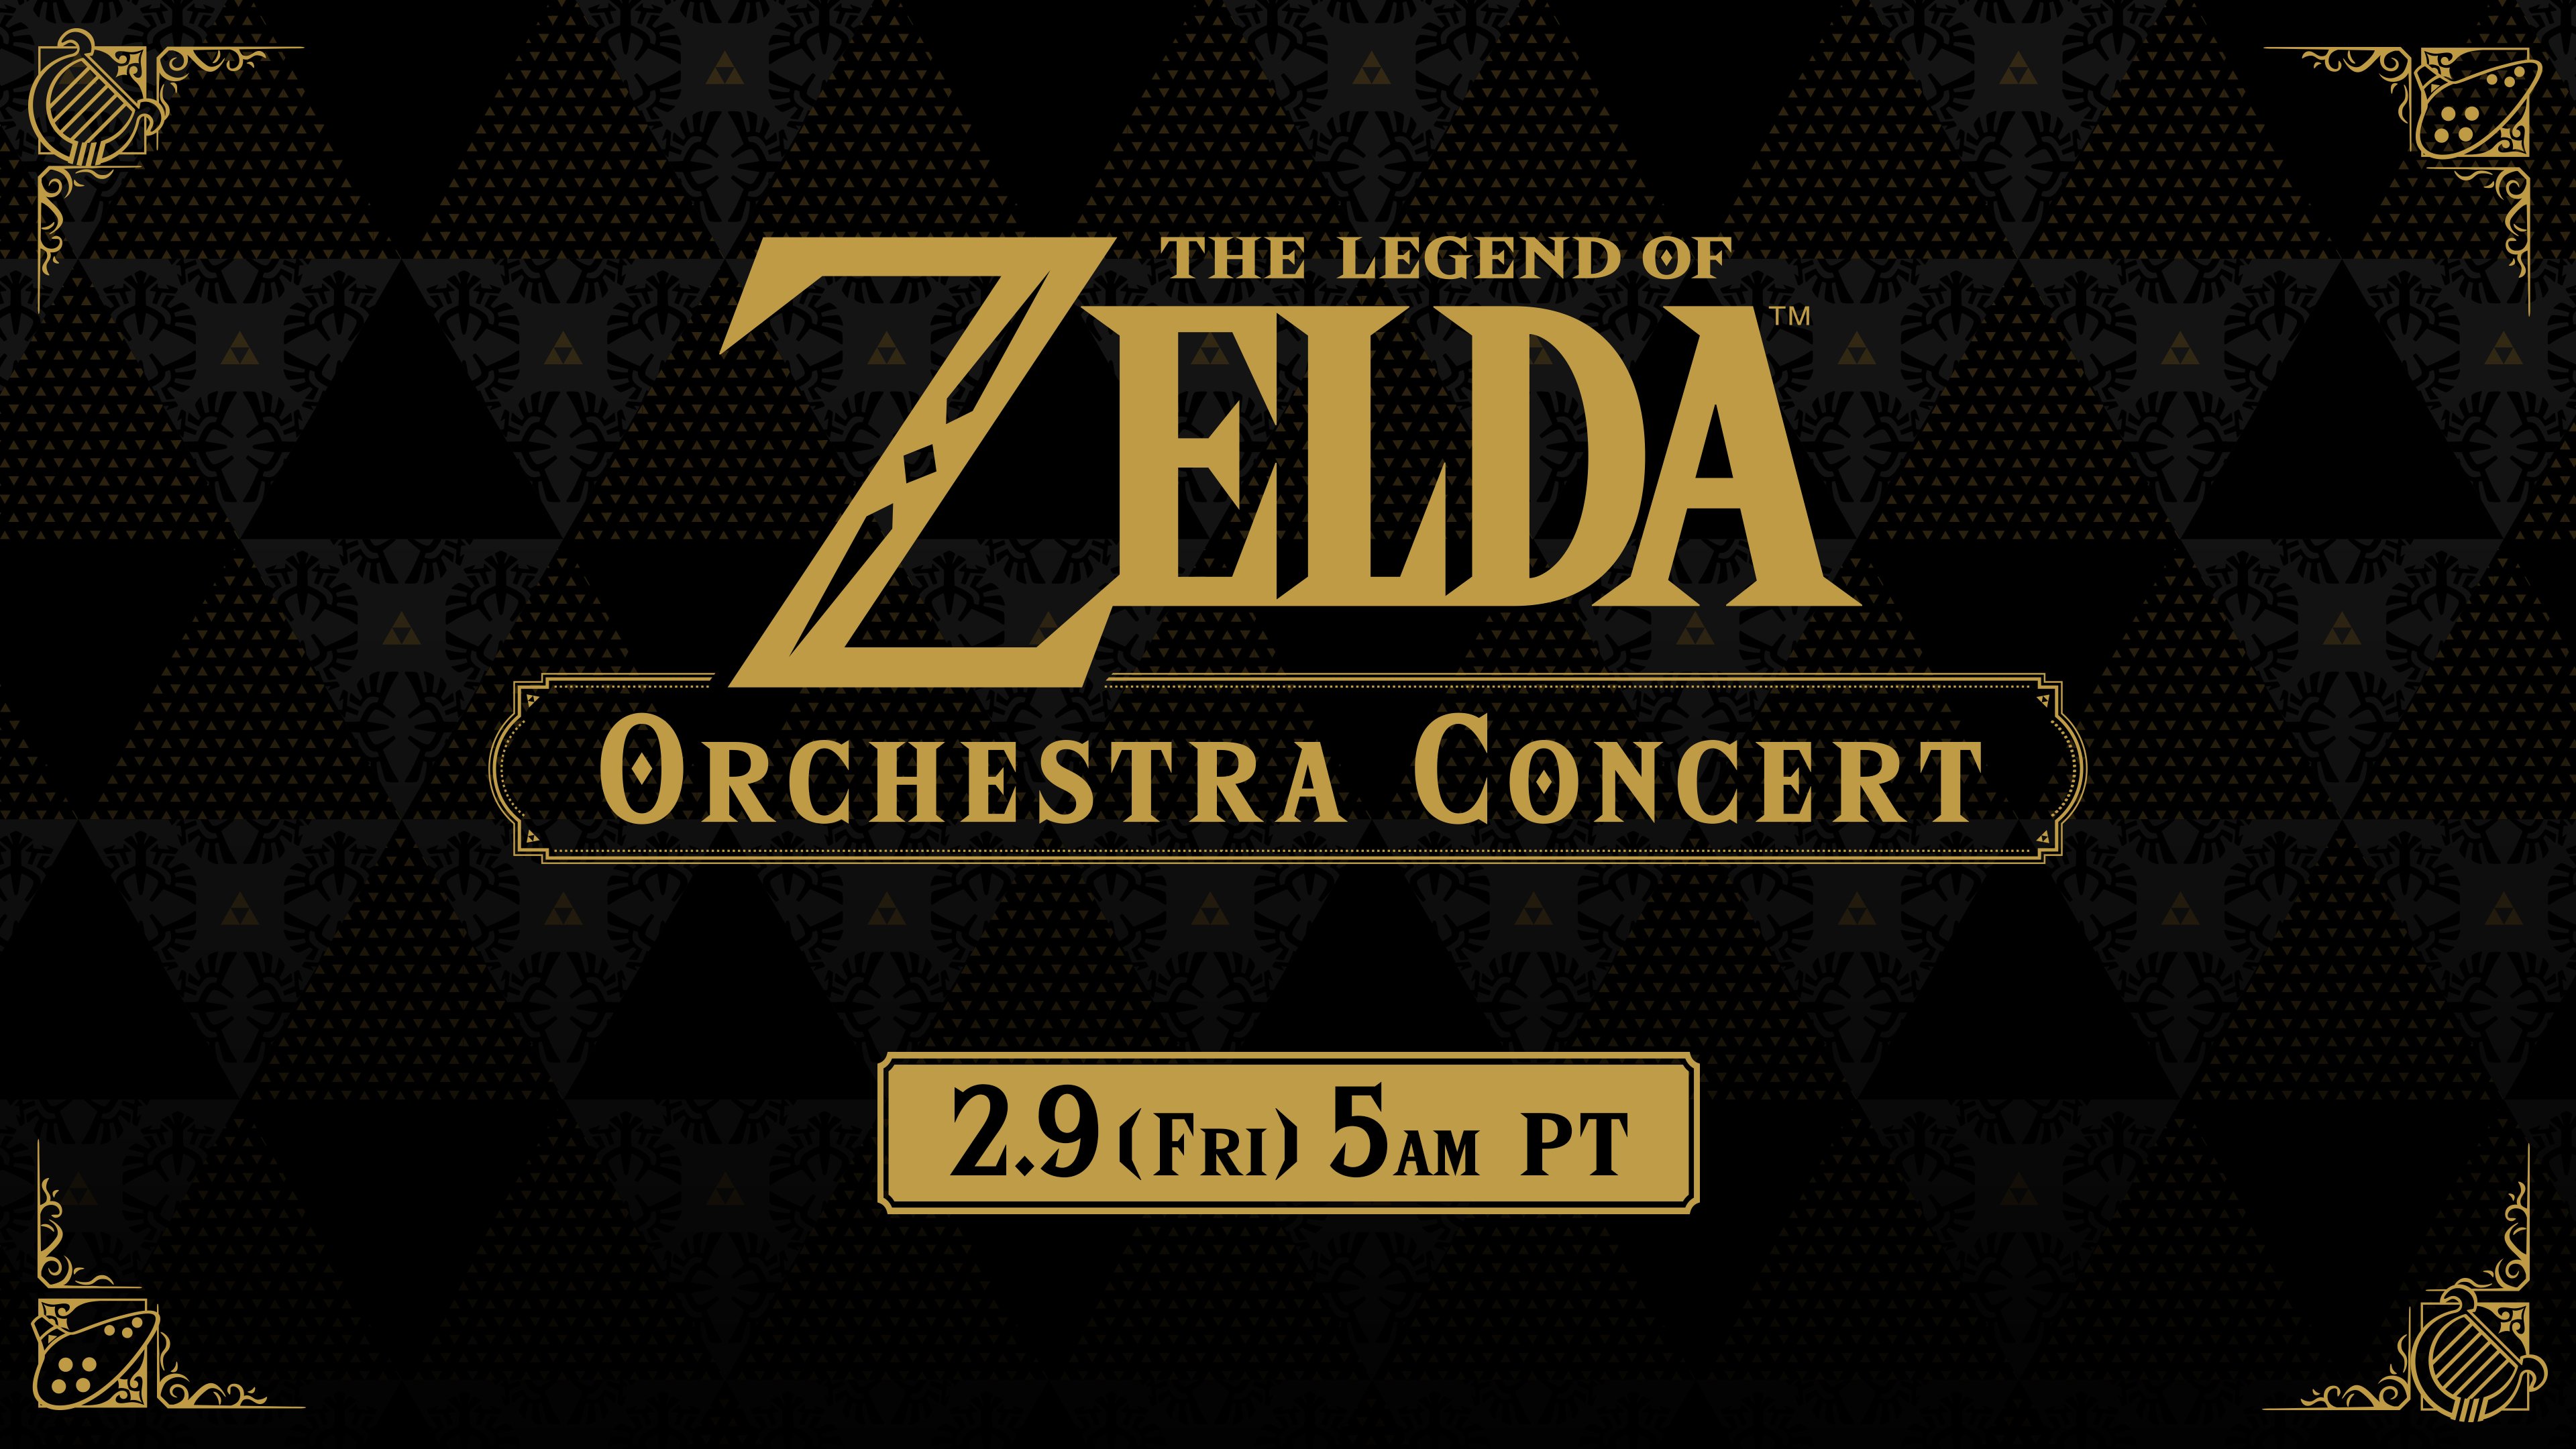 The Legend of Zelda Orchestra Concert set for February 9 [Update] - Gematsu